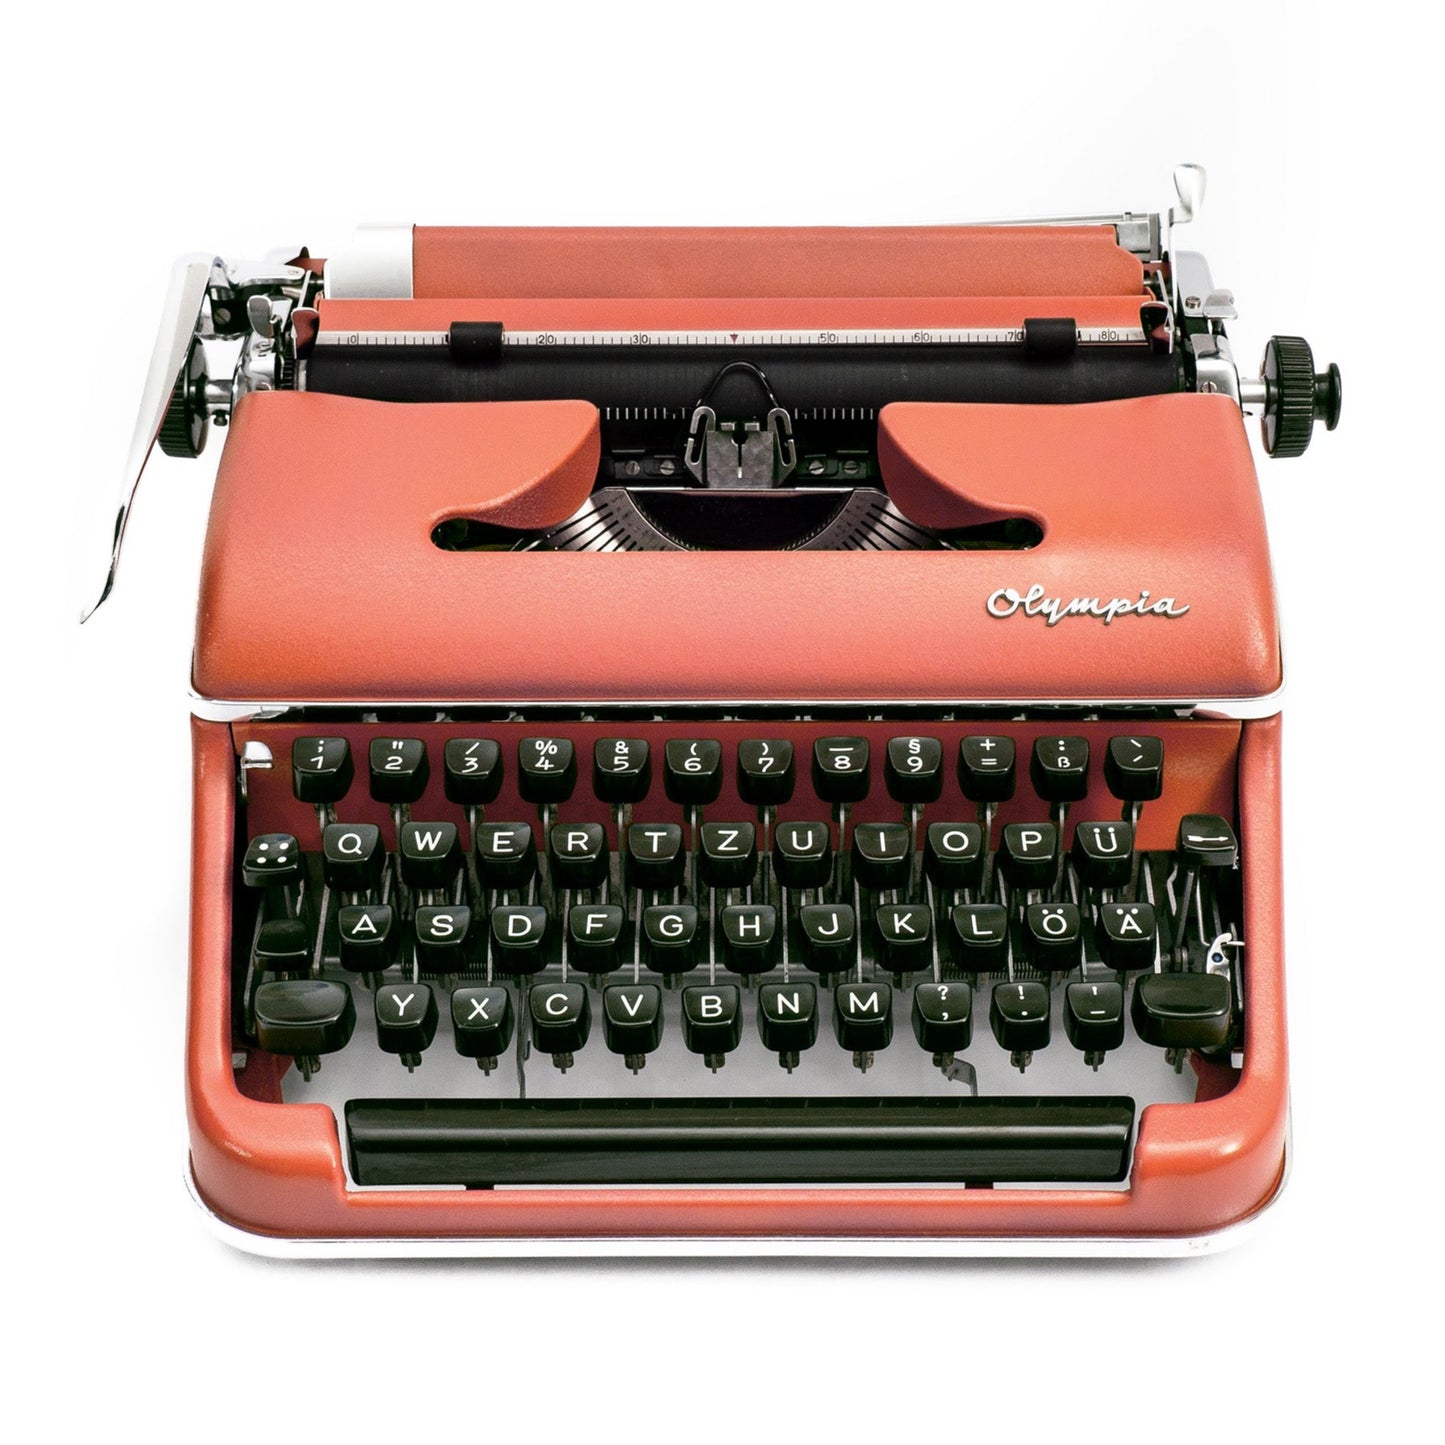 Olympia SM2 Typewriter, Apricot